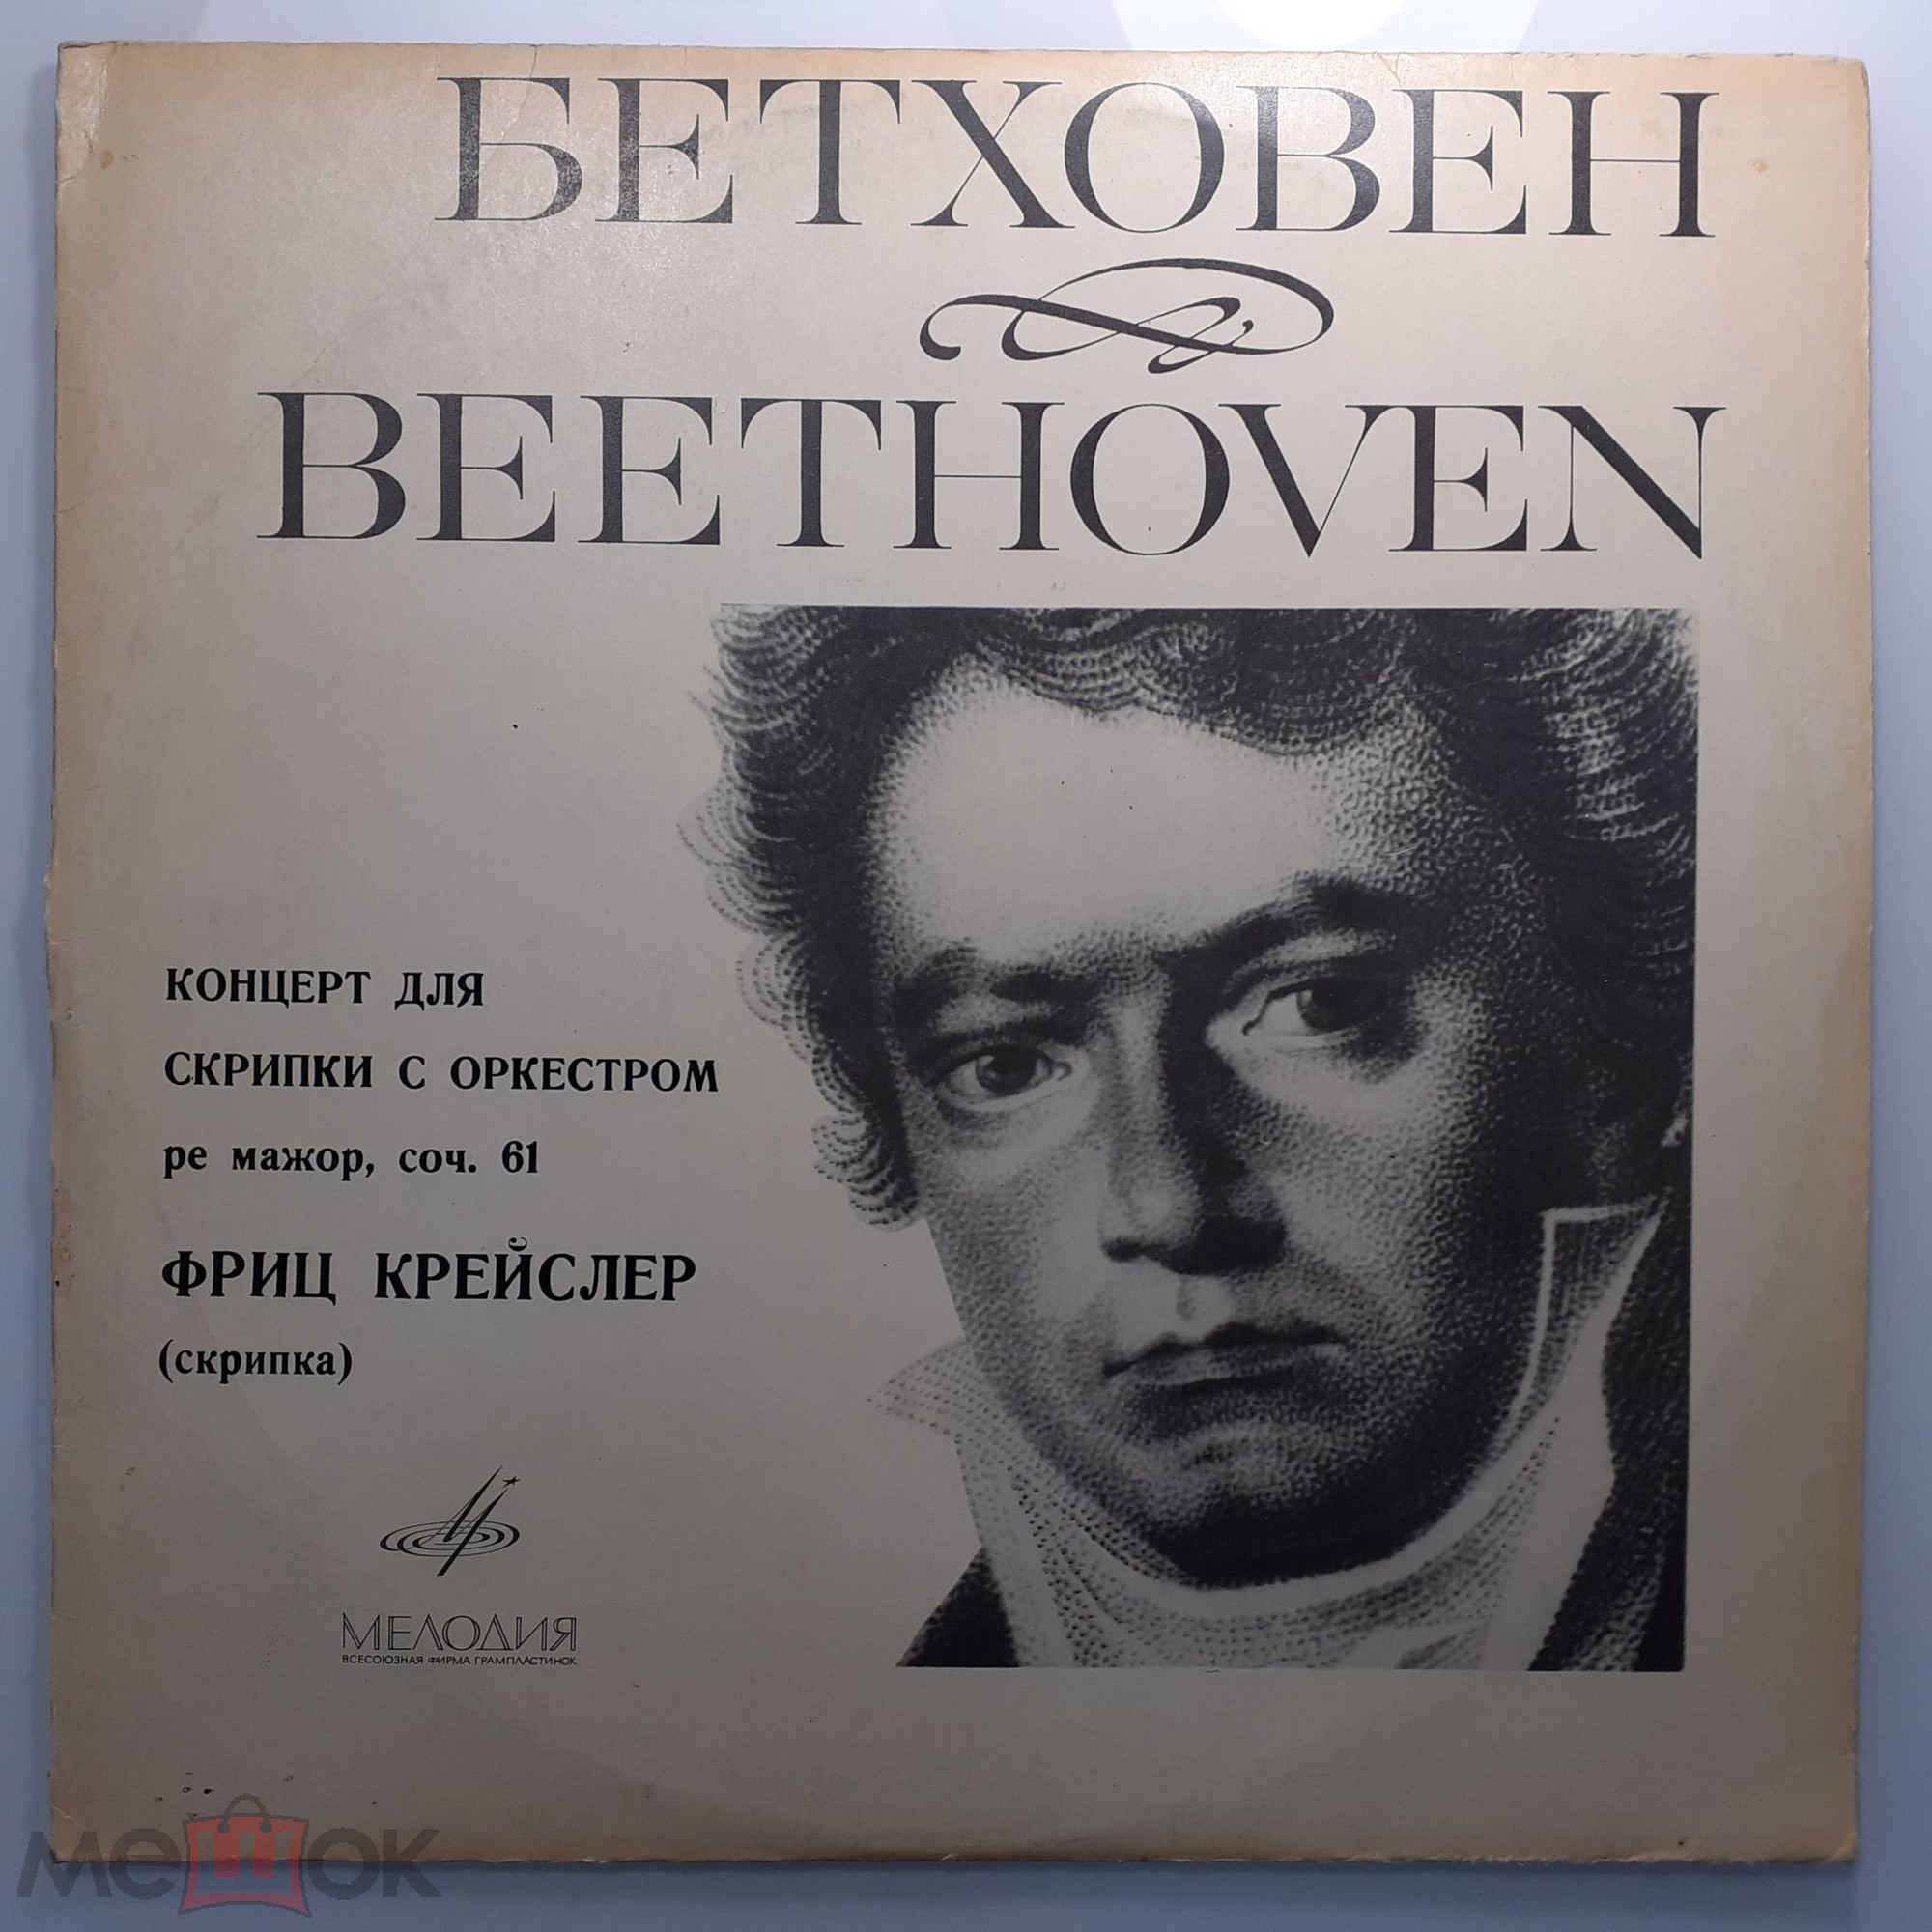 Л. БЕТХОВЕН (1770-1827) Концерт для скрипки с оркестром ре мажор, соч. 61 (Ф. Крейслер, Дж. Барбиролли)